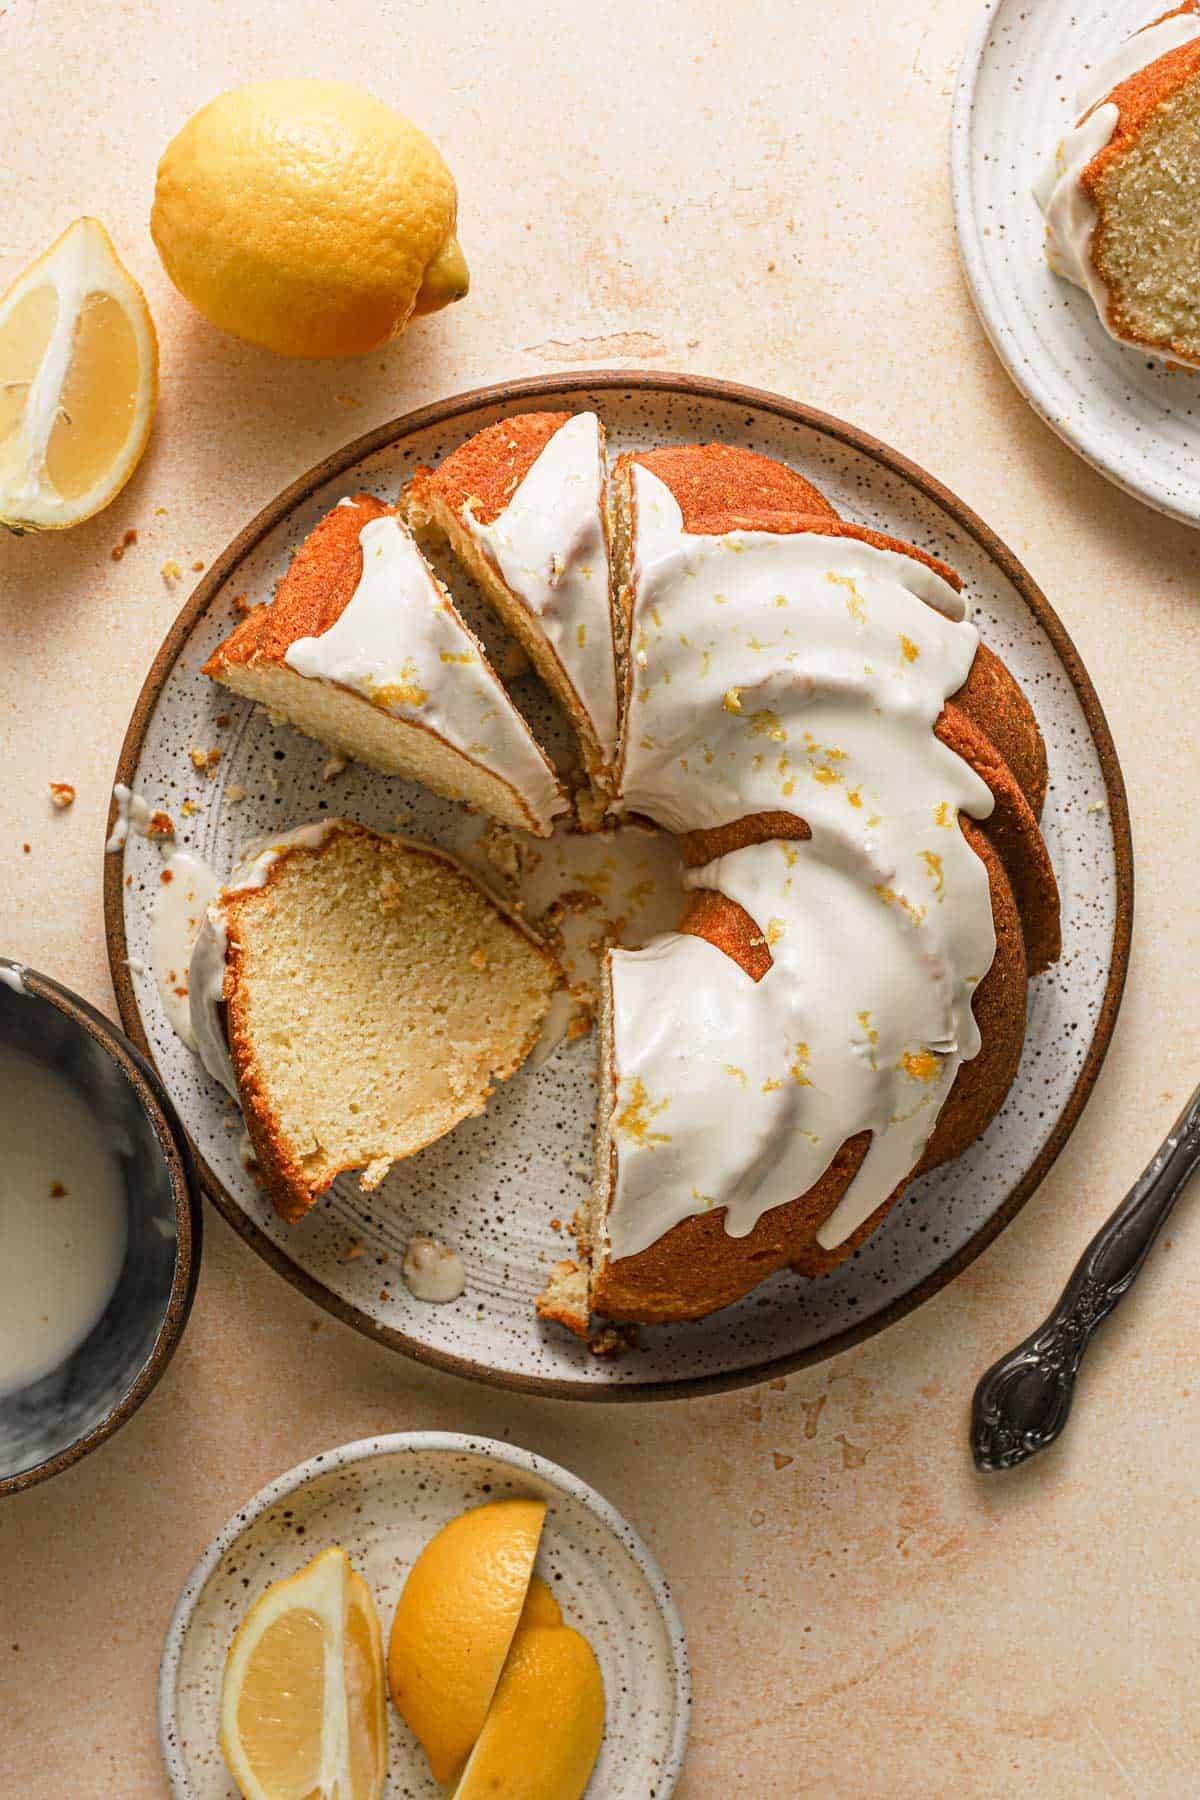 A bundt cake with glaze and lemons around it.